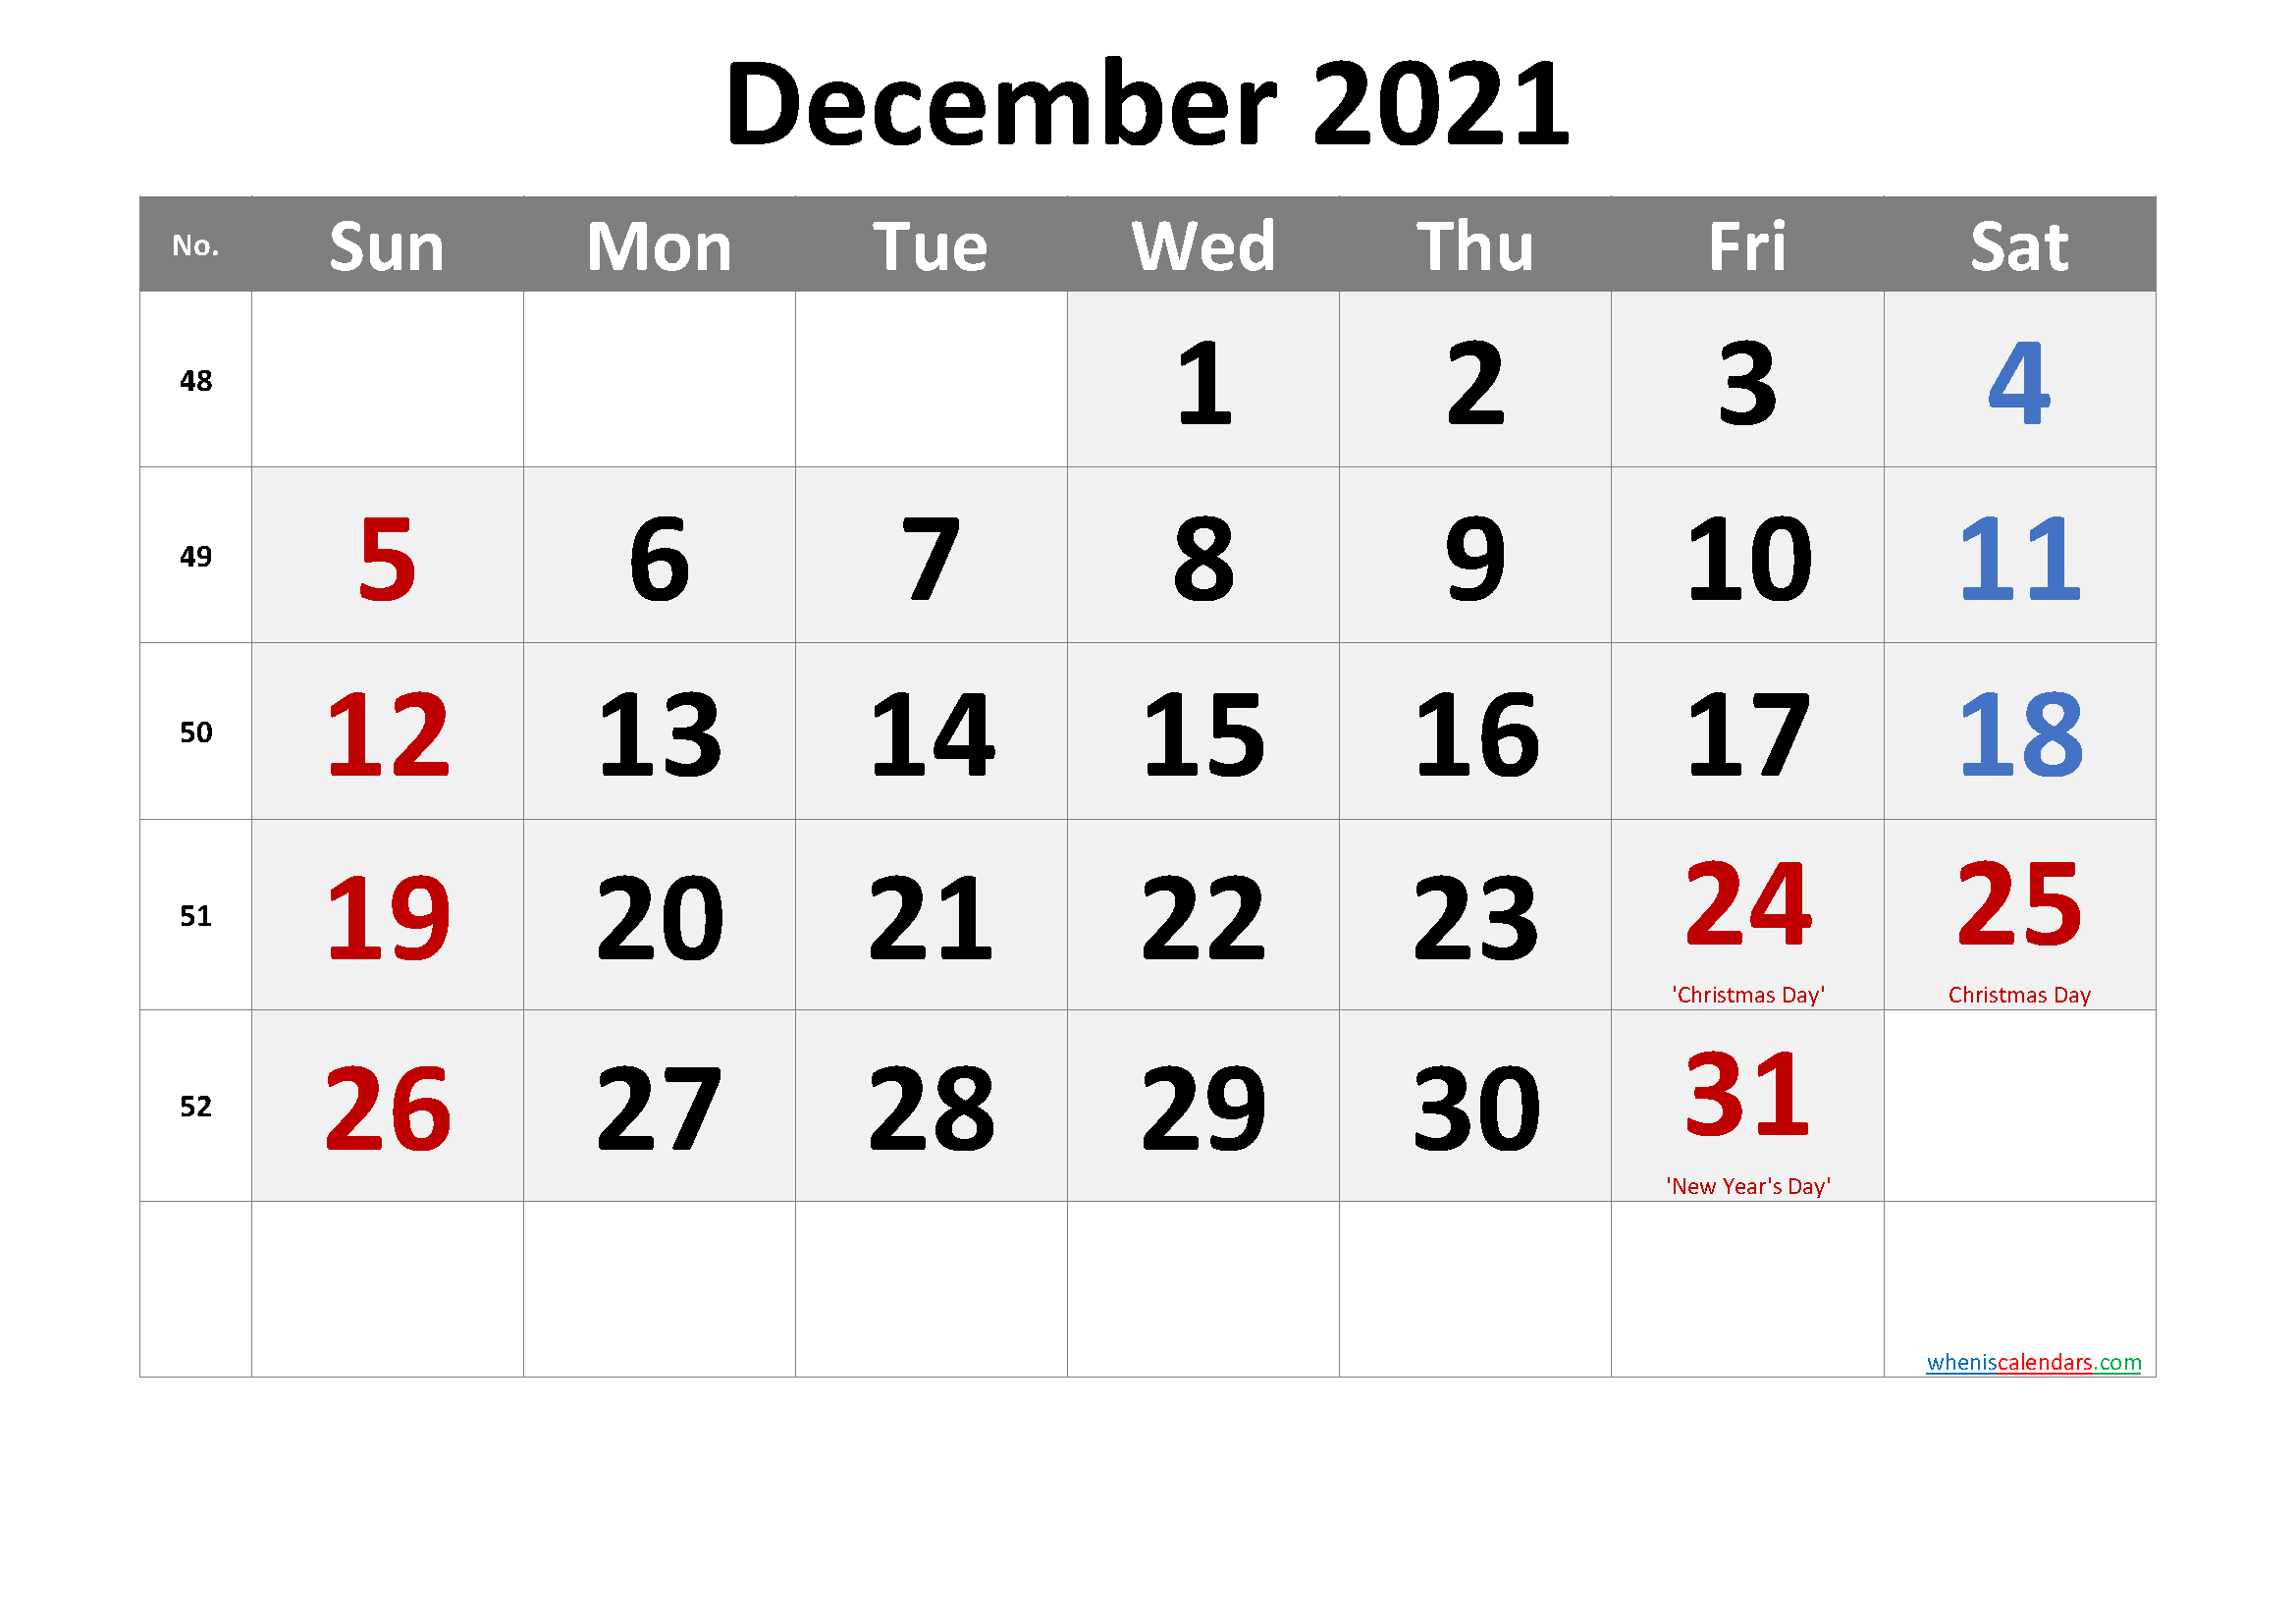 DECEMBER 2021 Printable Calendar with Holidays